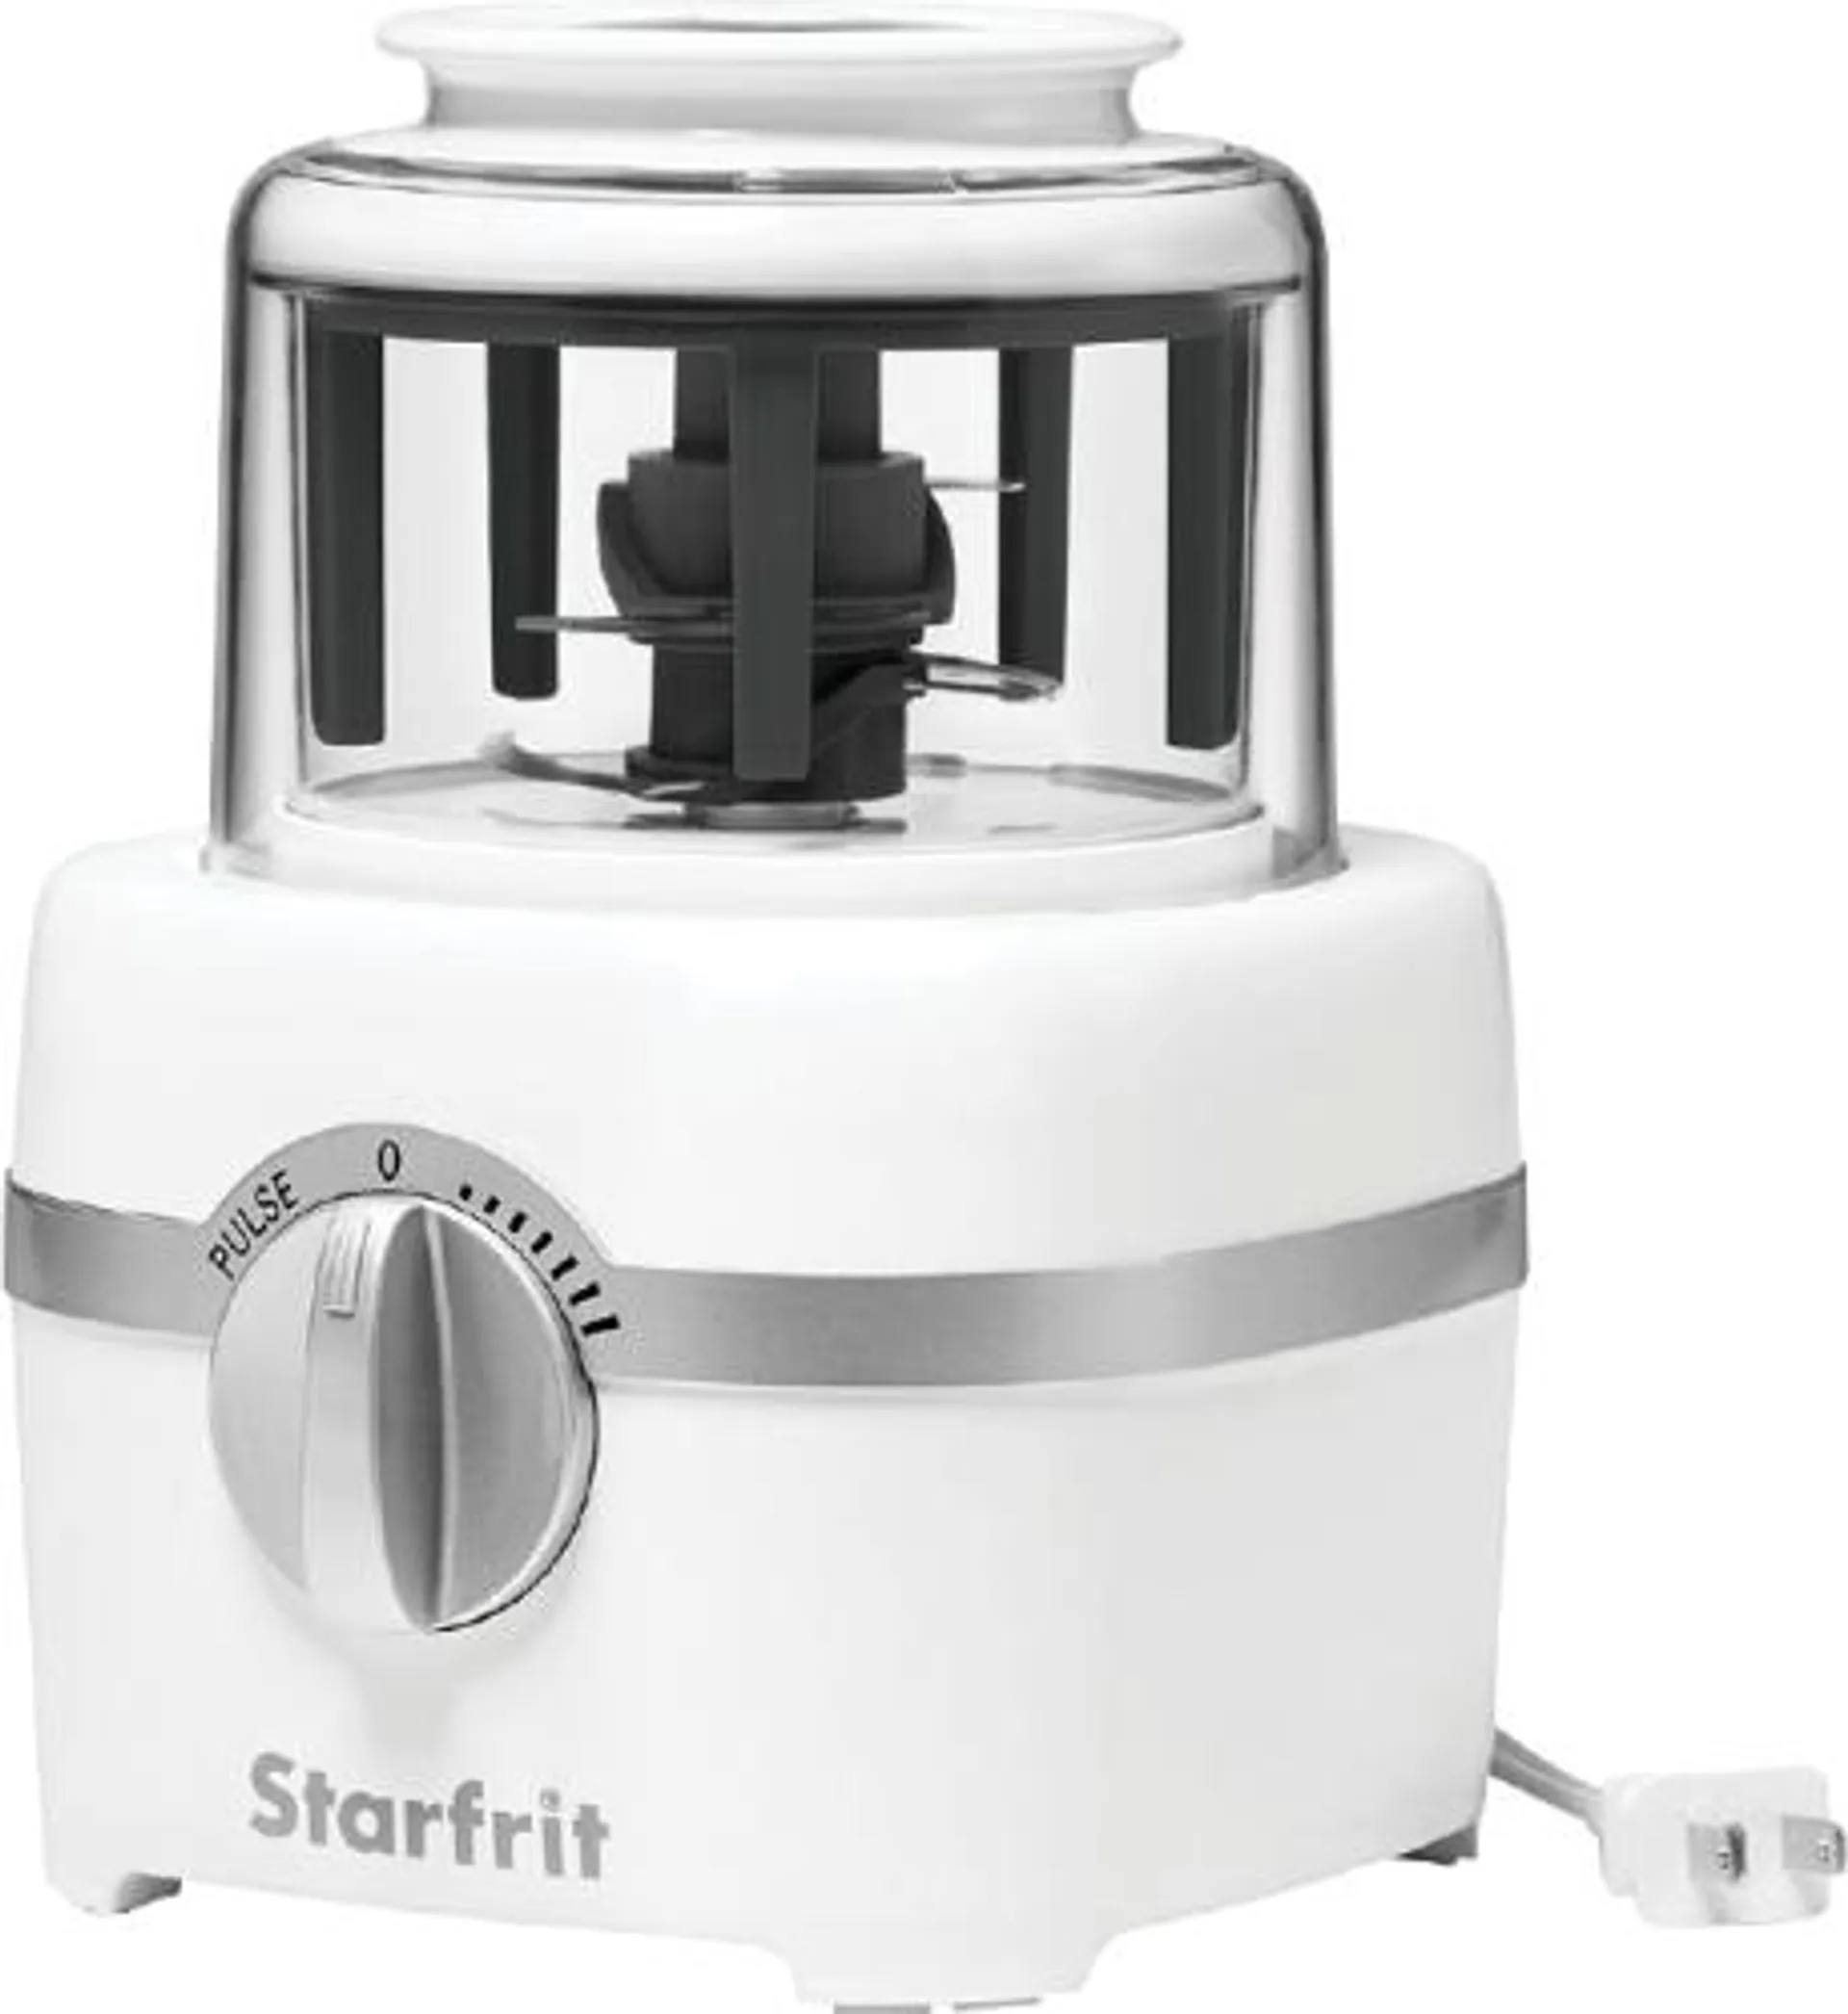 Starfrit Electric Food Chopper 2.75 Cup - 400w